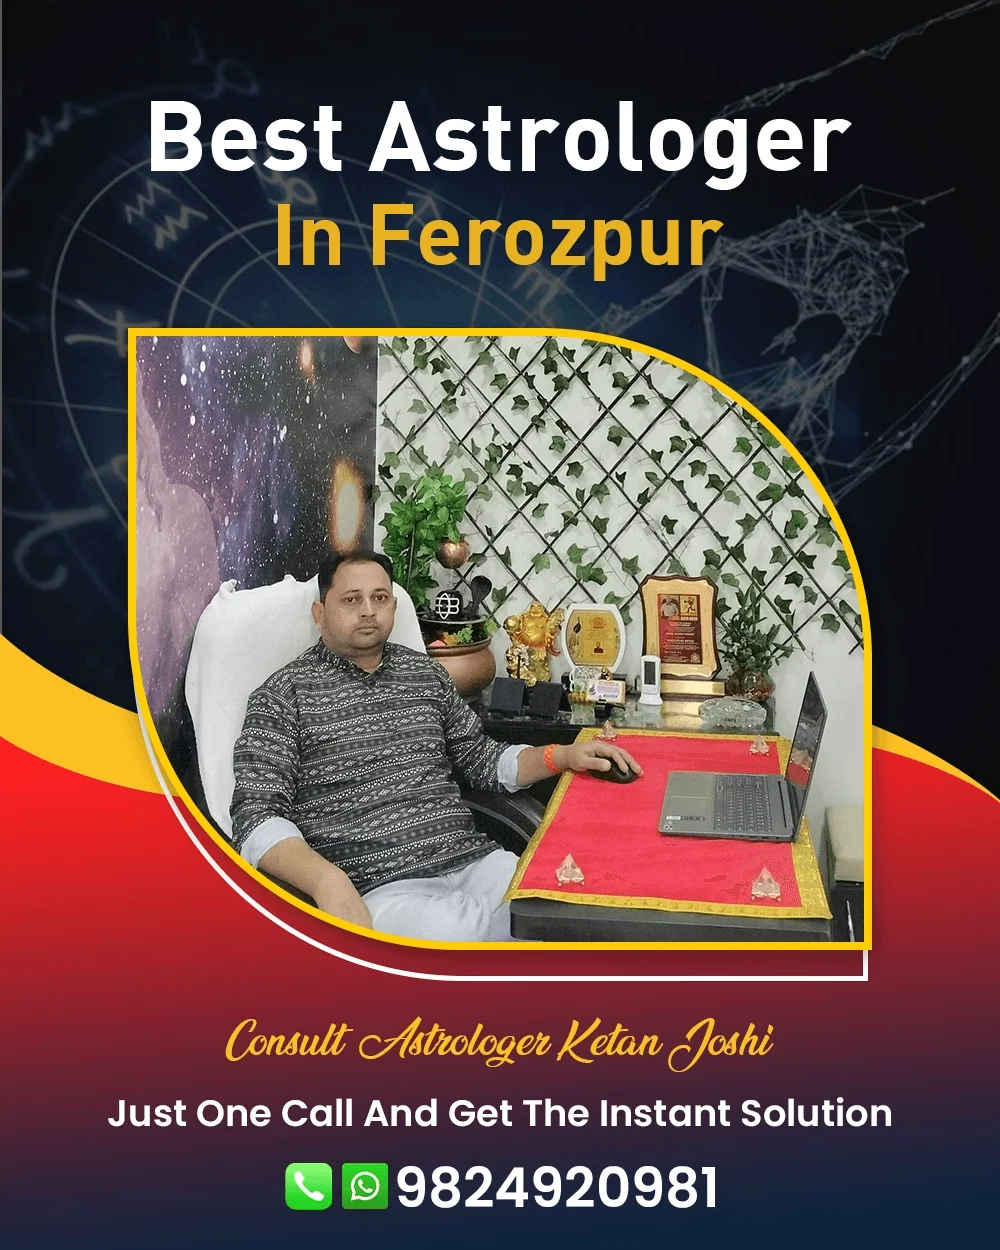 Best Astrologer In Ferozpur